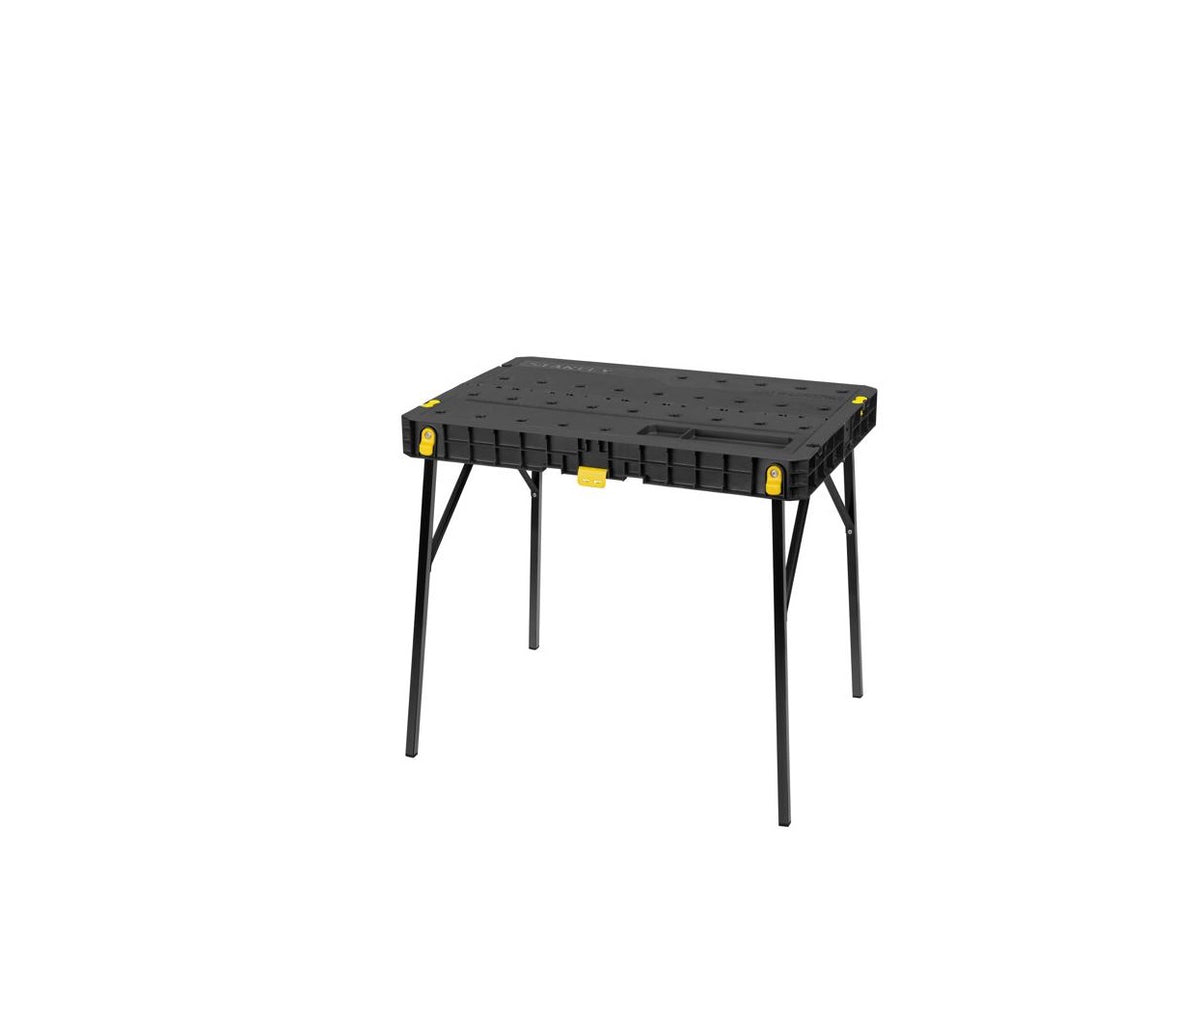 Stanley STST11552 Folding Workbench, Black, 700 lb Capacity